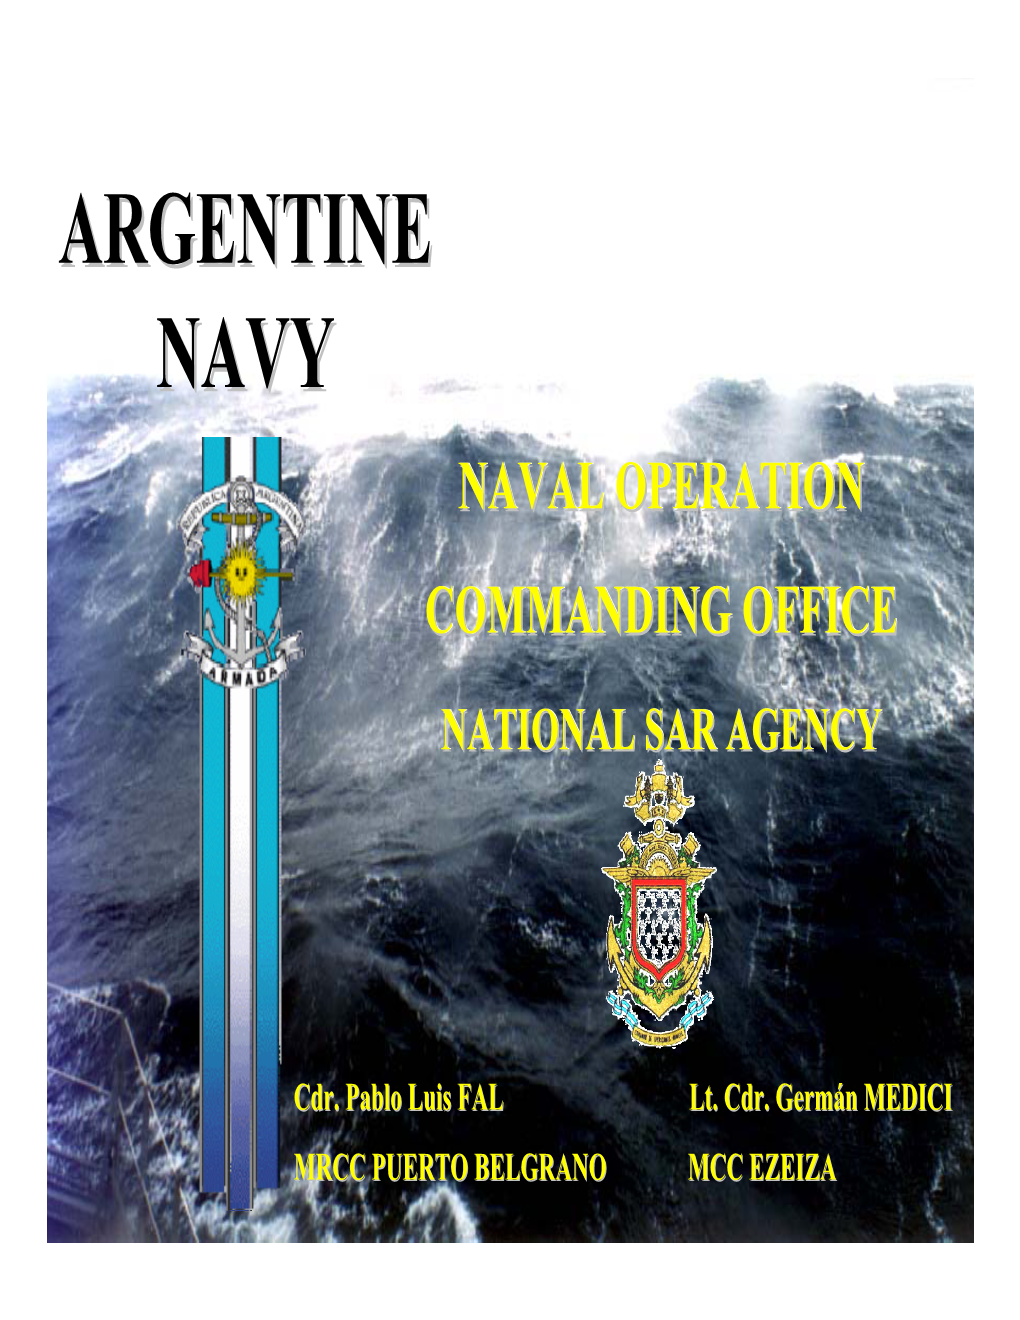 Argentine Navynavy Navalnaval Operationoperation Commandingcommanding Officeoffice Nationalnational Sarsar Agencyagency